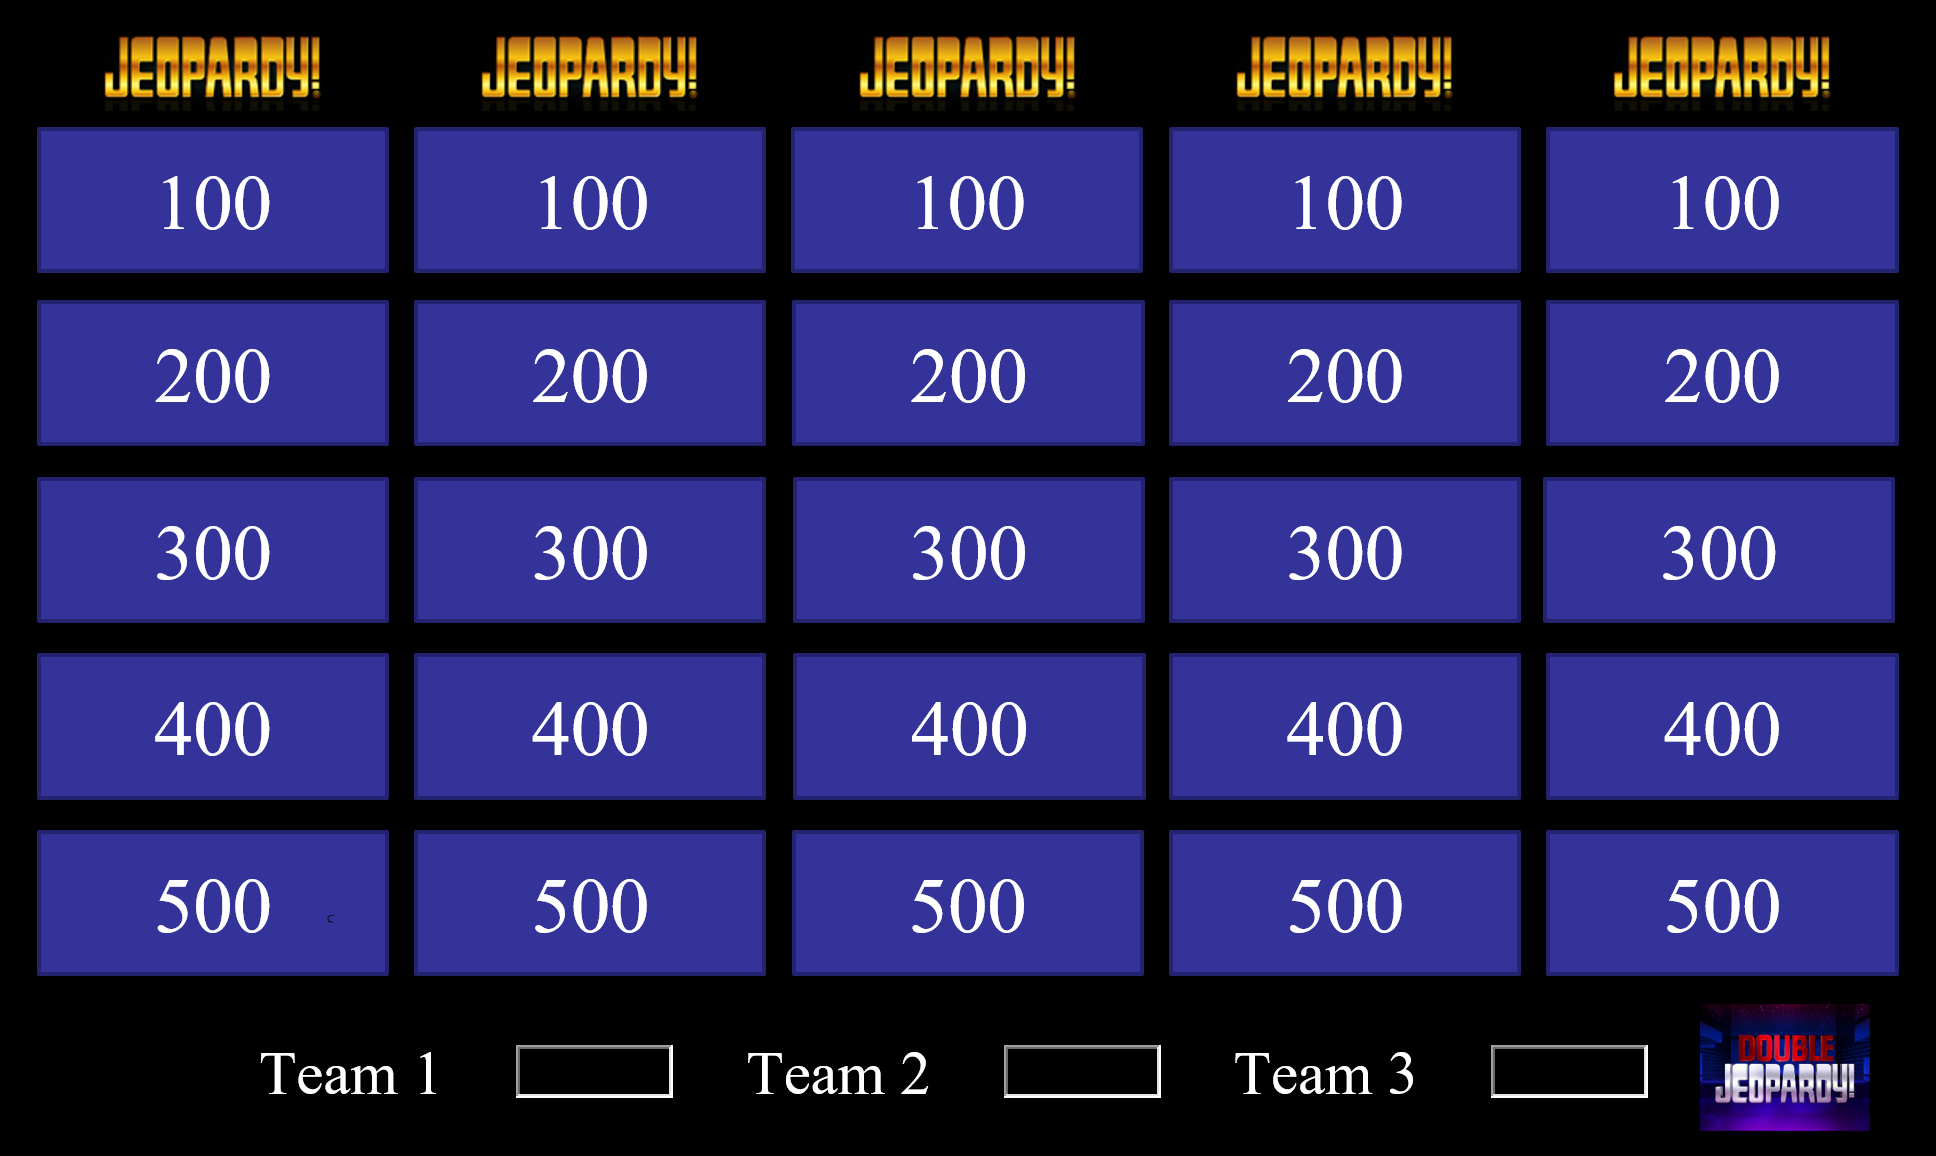 033 Jeopardy Powerpoint Template With Score Excellent Ideas Regarding Jeopardy Powerpoint Template With Score